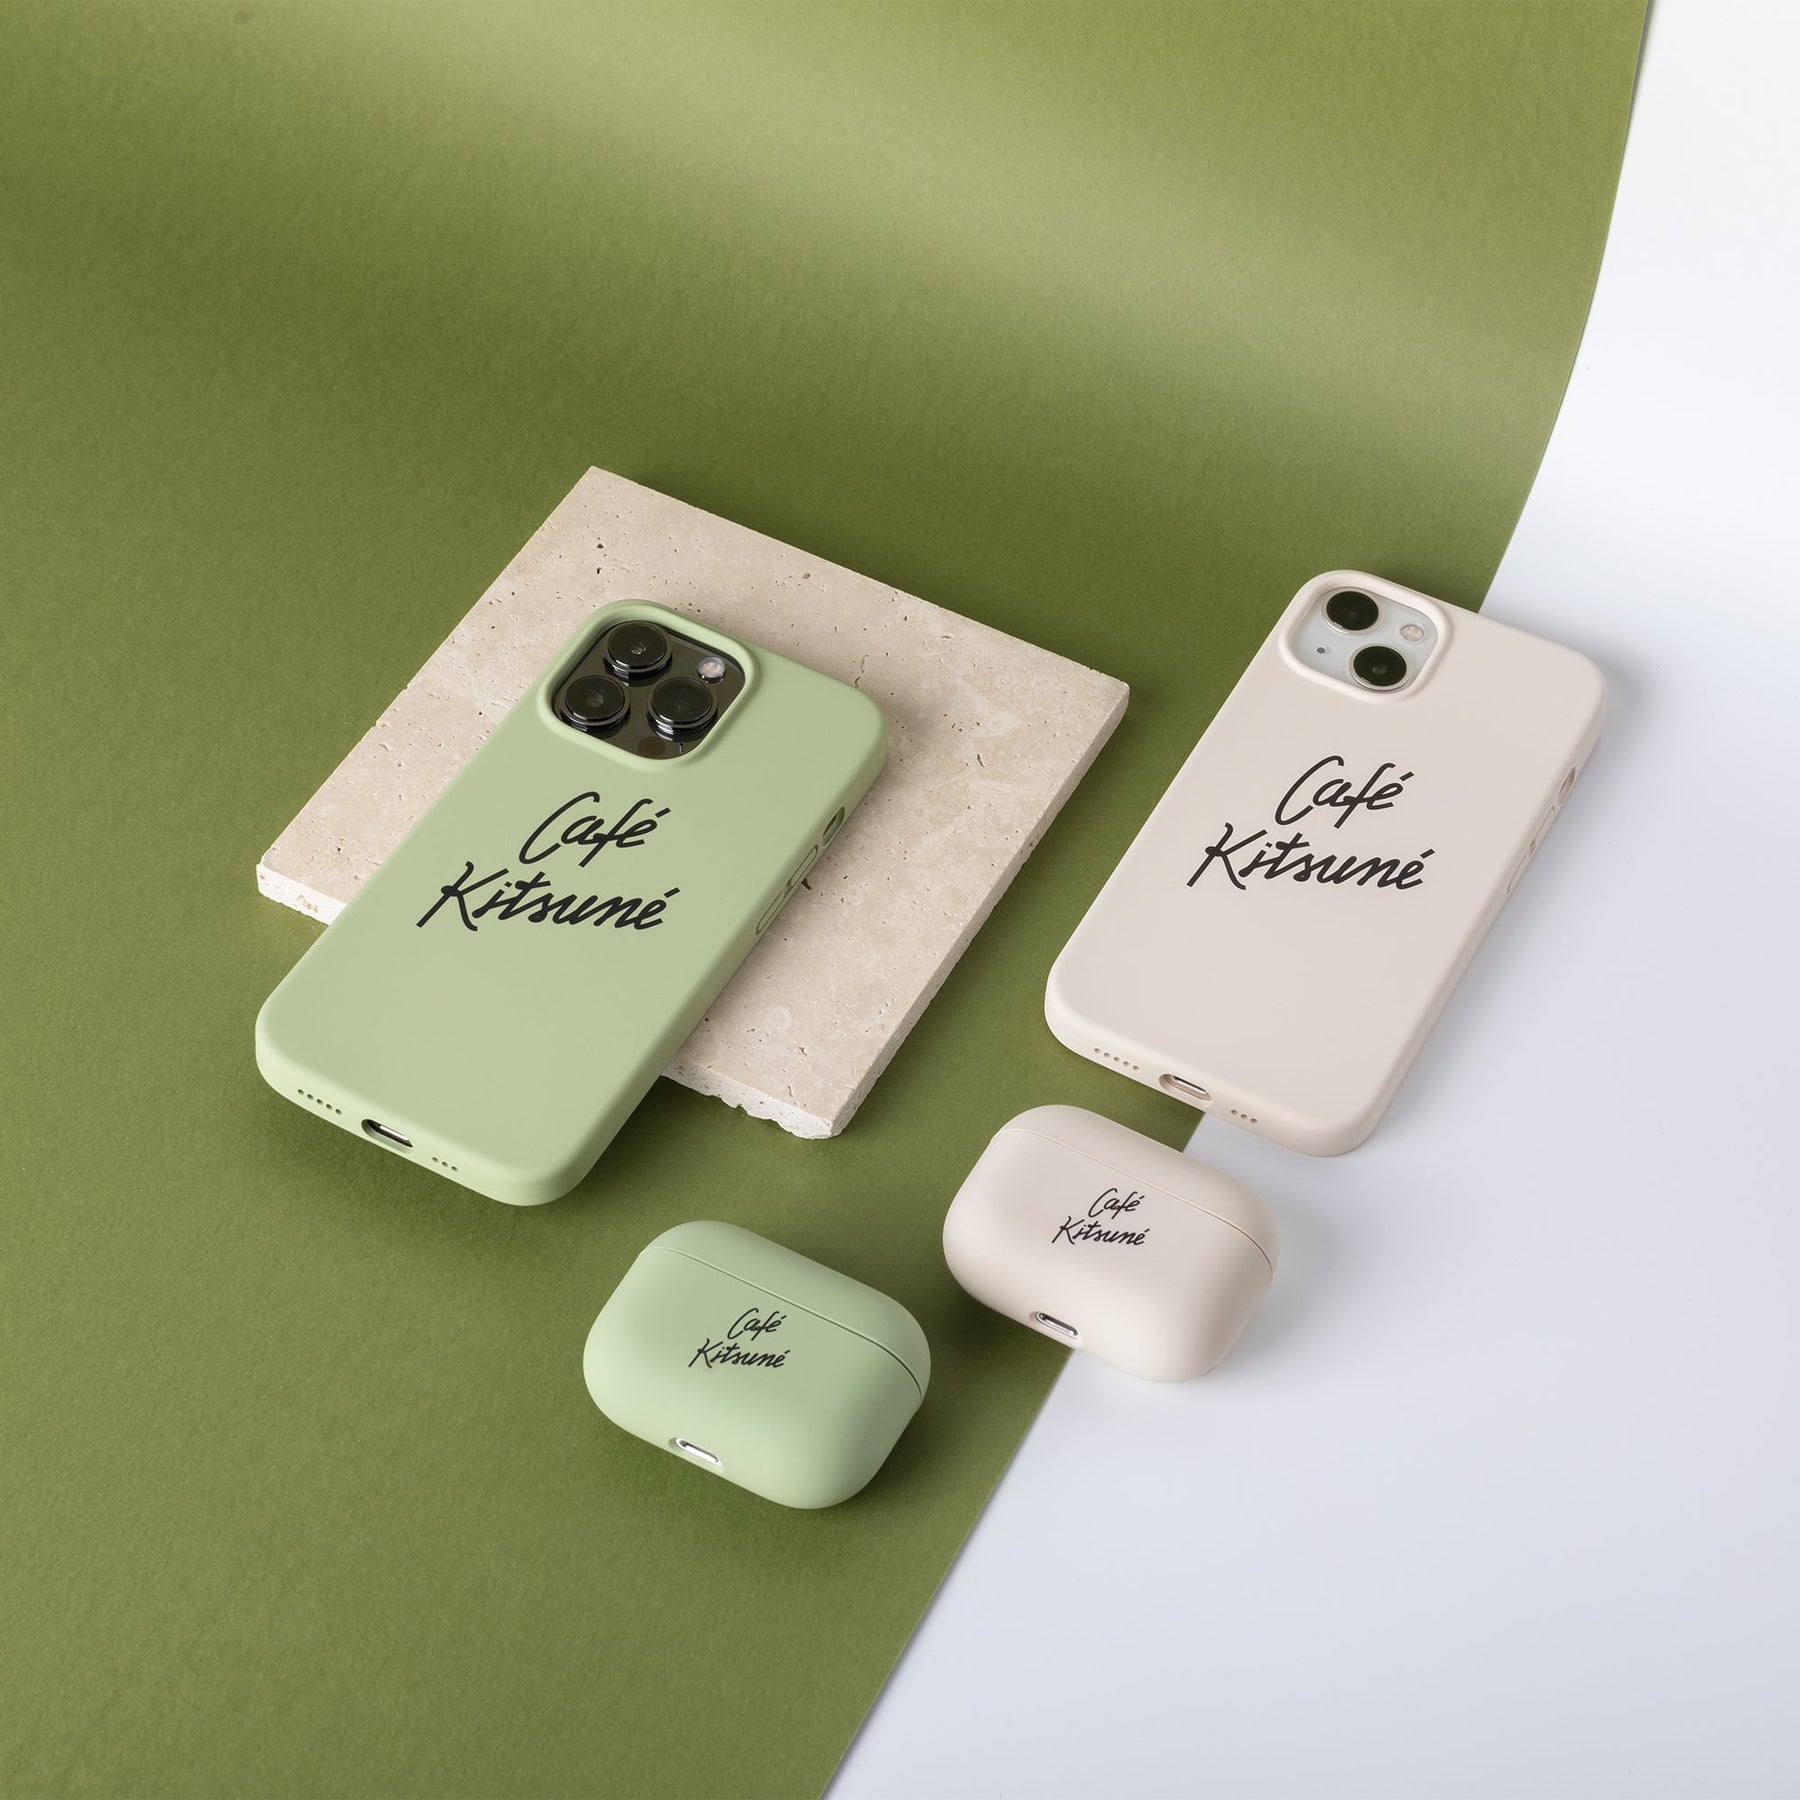 Designer Louis Vuitton Protective Case for Apple Airpods 1/2 (Green)